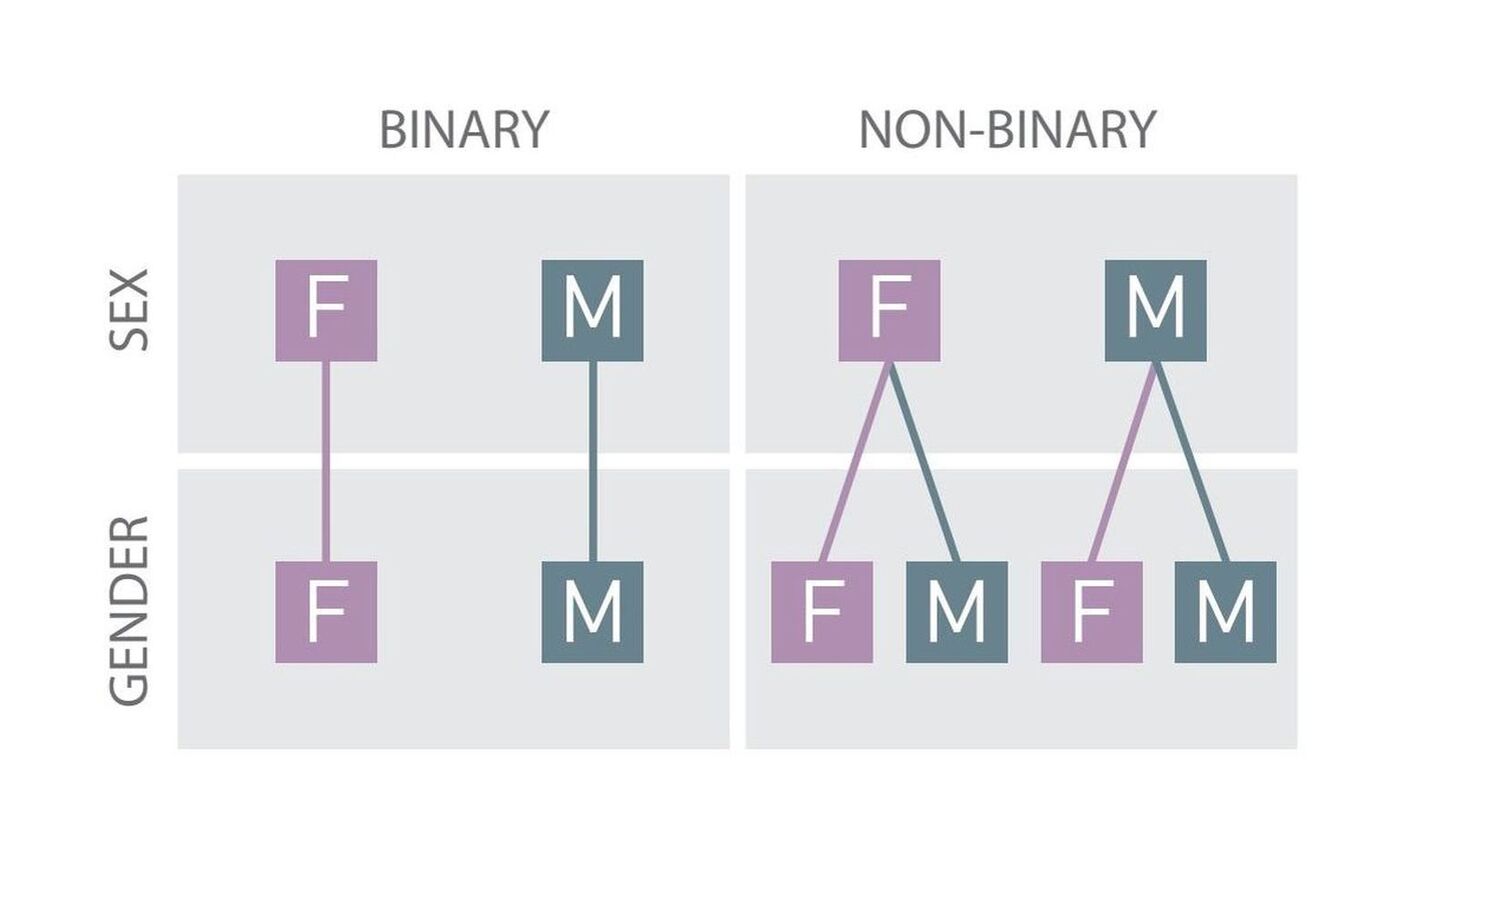 Binary and non-binary models (F: female/feminine; M: male/masculine)